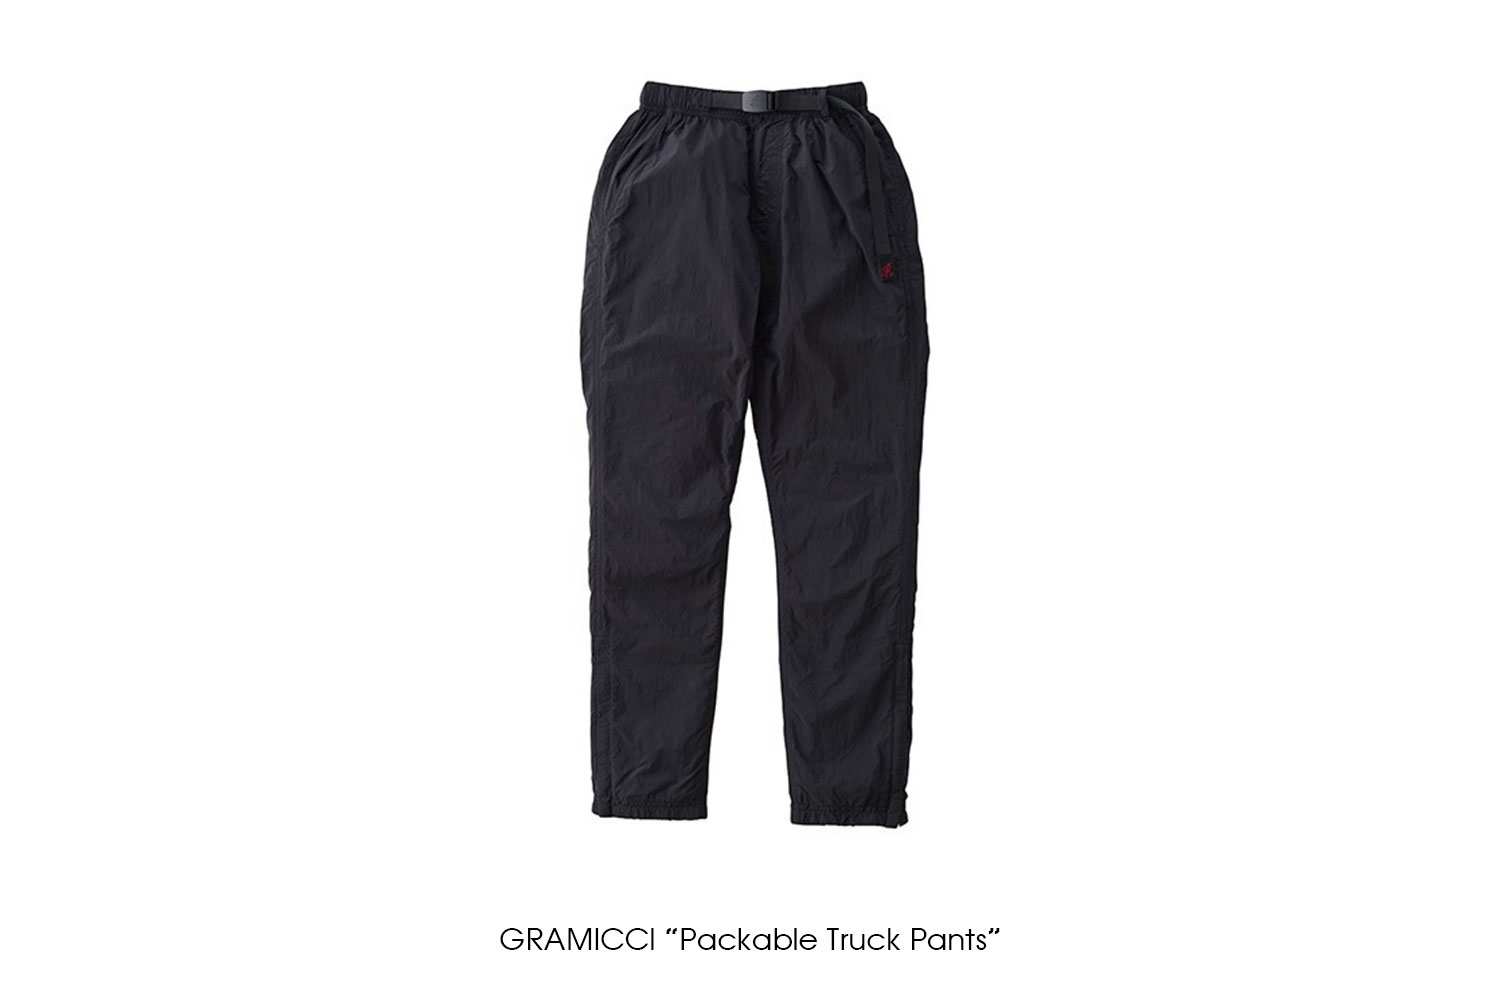 GRAMICCI "Packable Truck Pants"